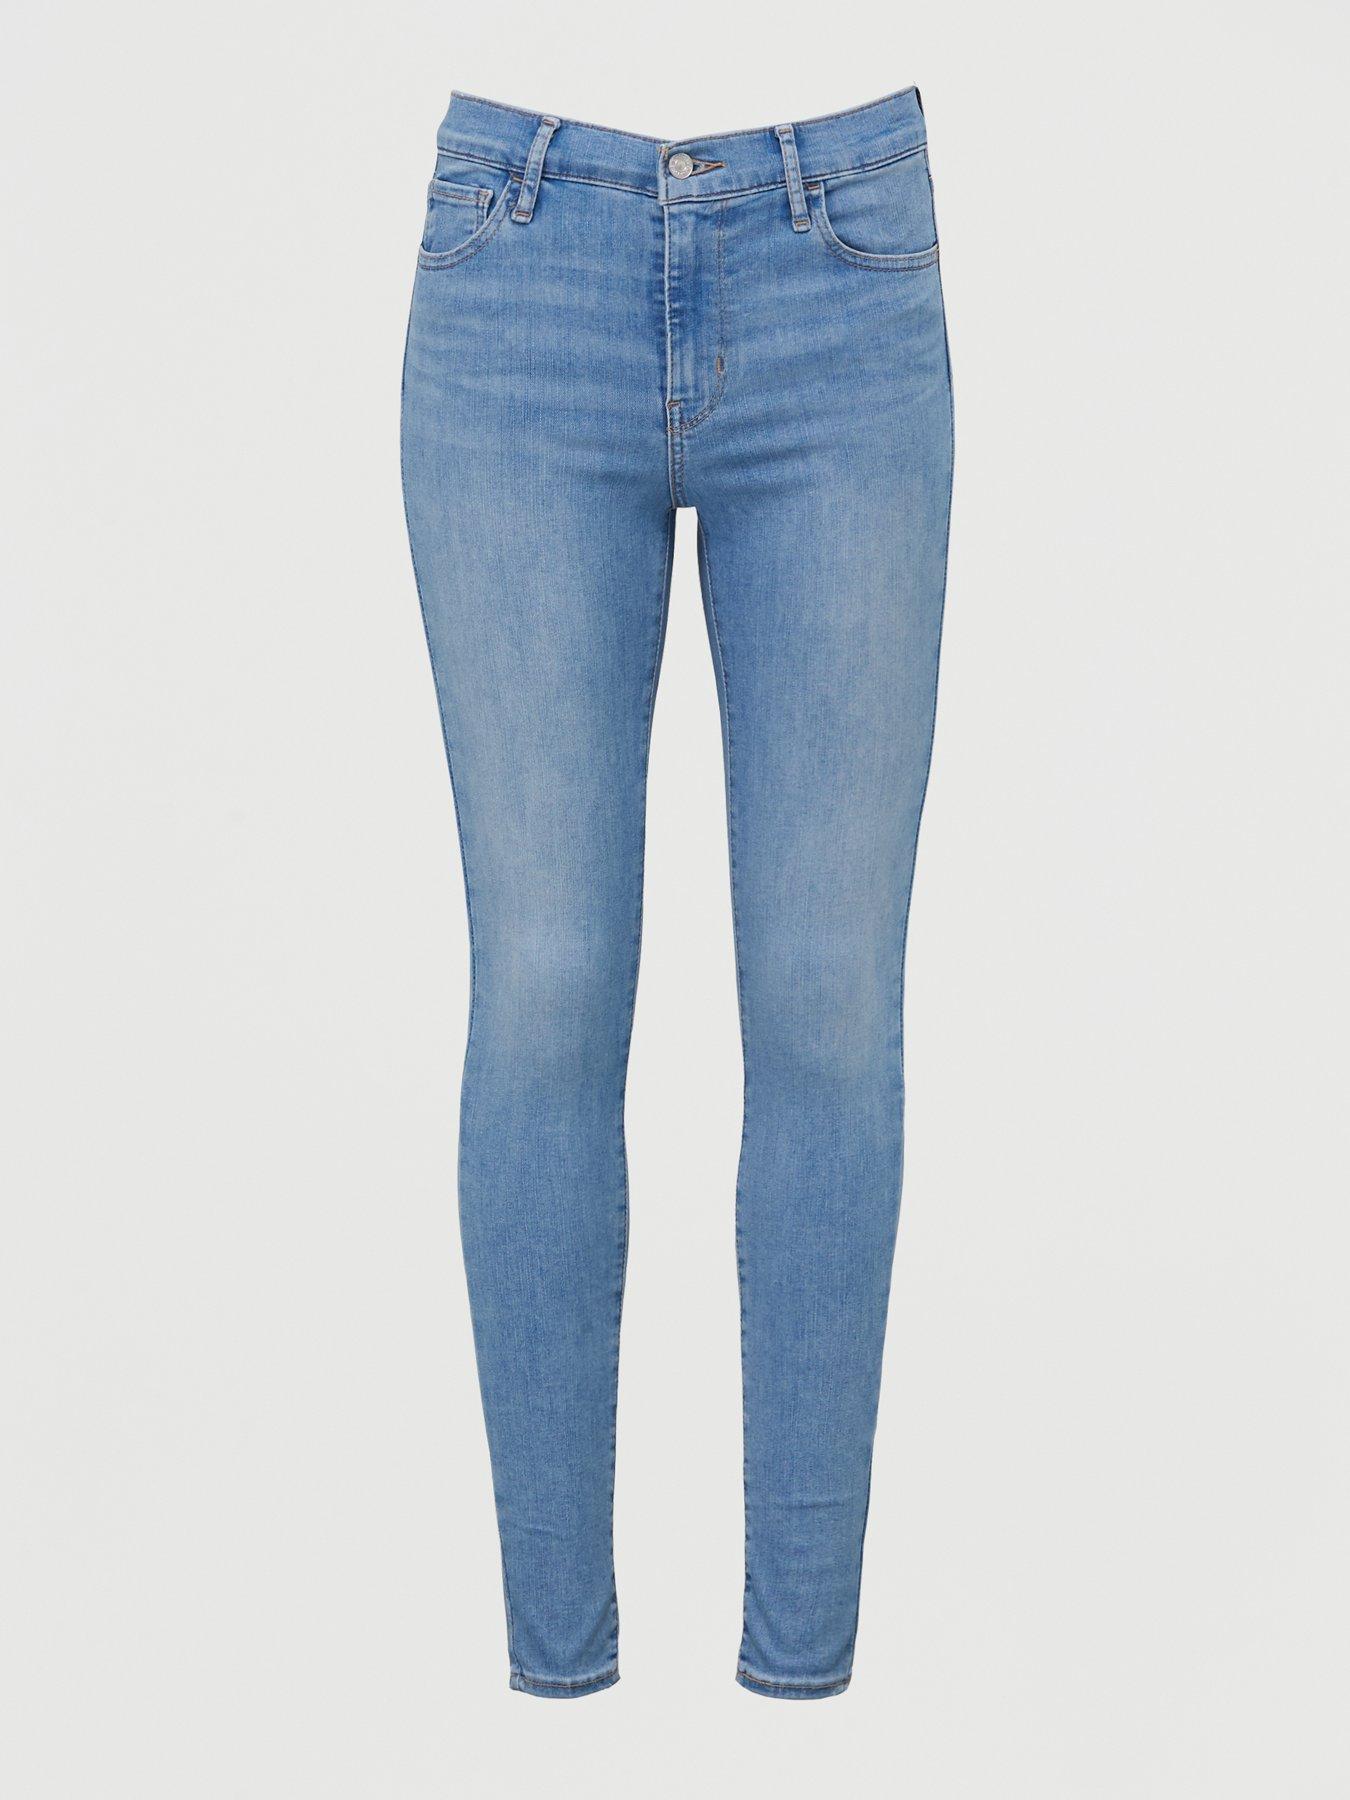 levi's 701 skinny jeans